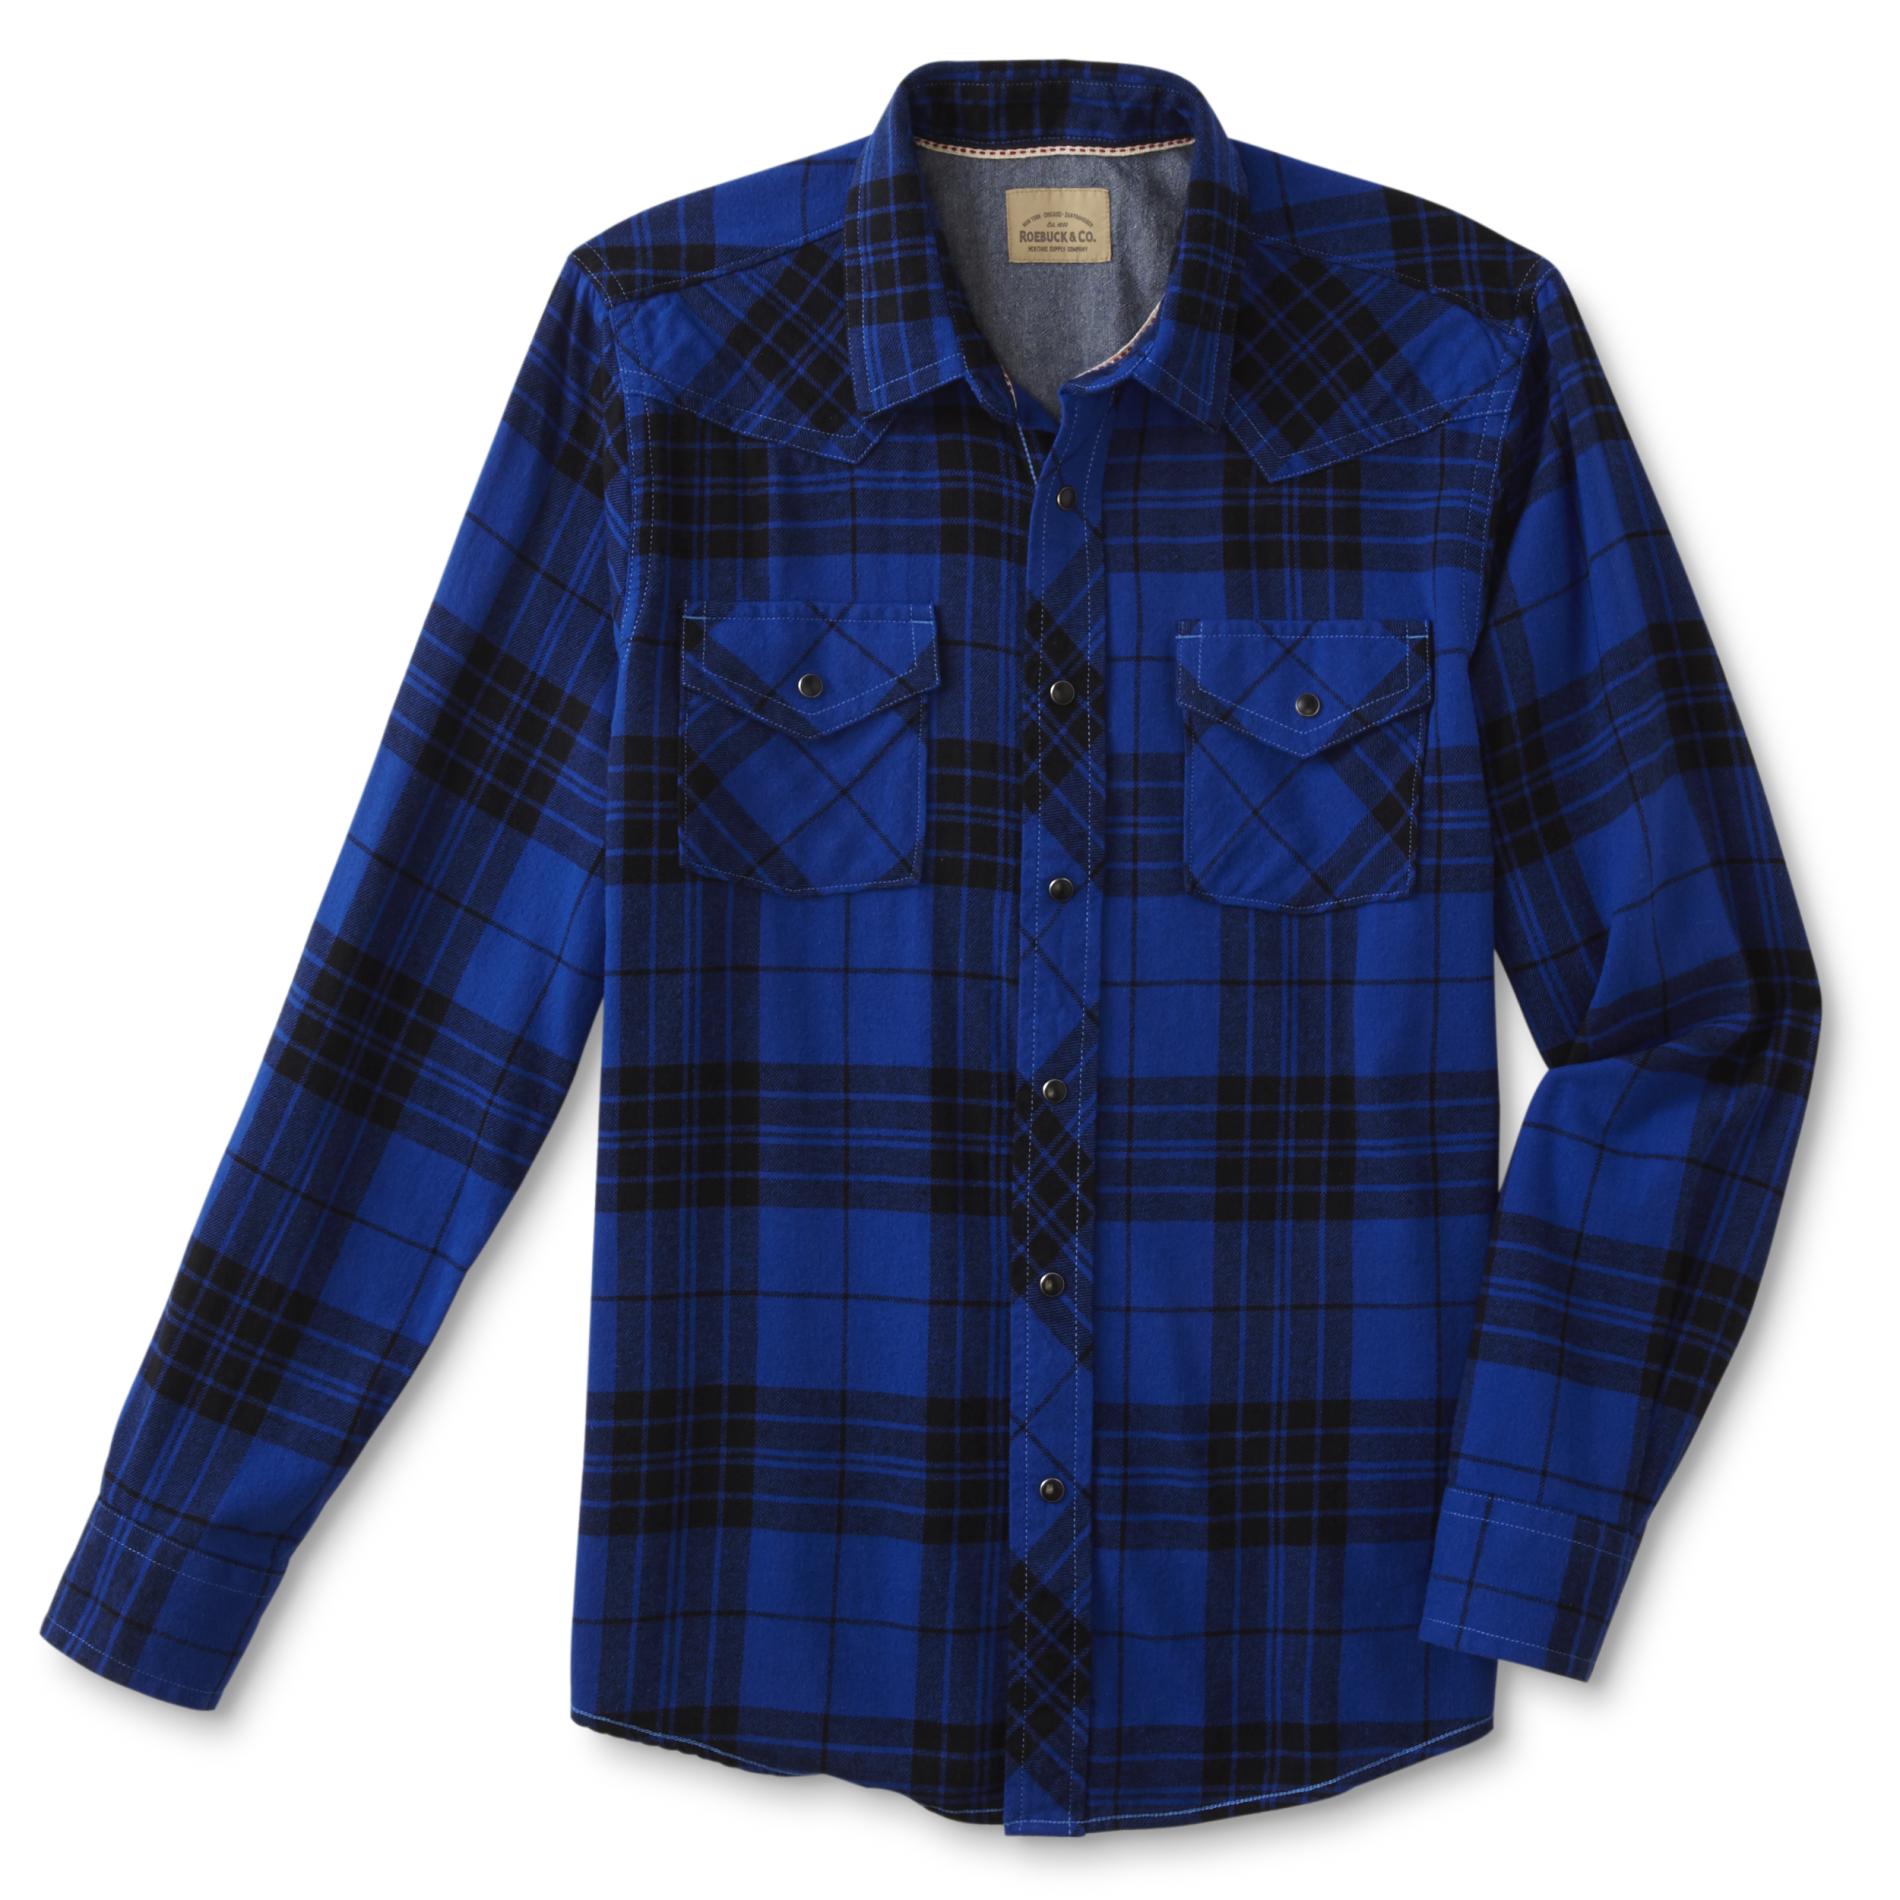 Roebuck & Co. Men's Flannel Shirt - Plaid